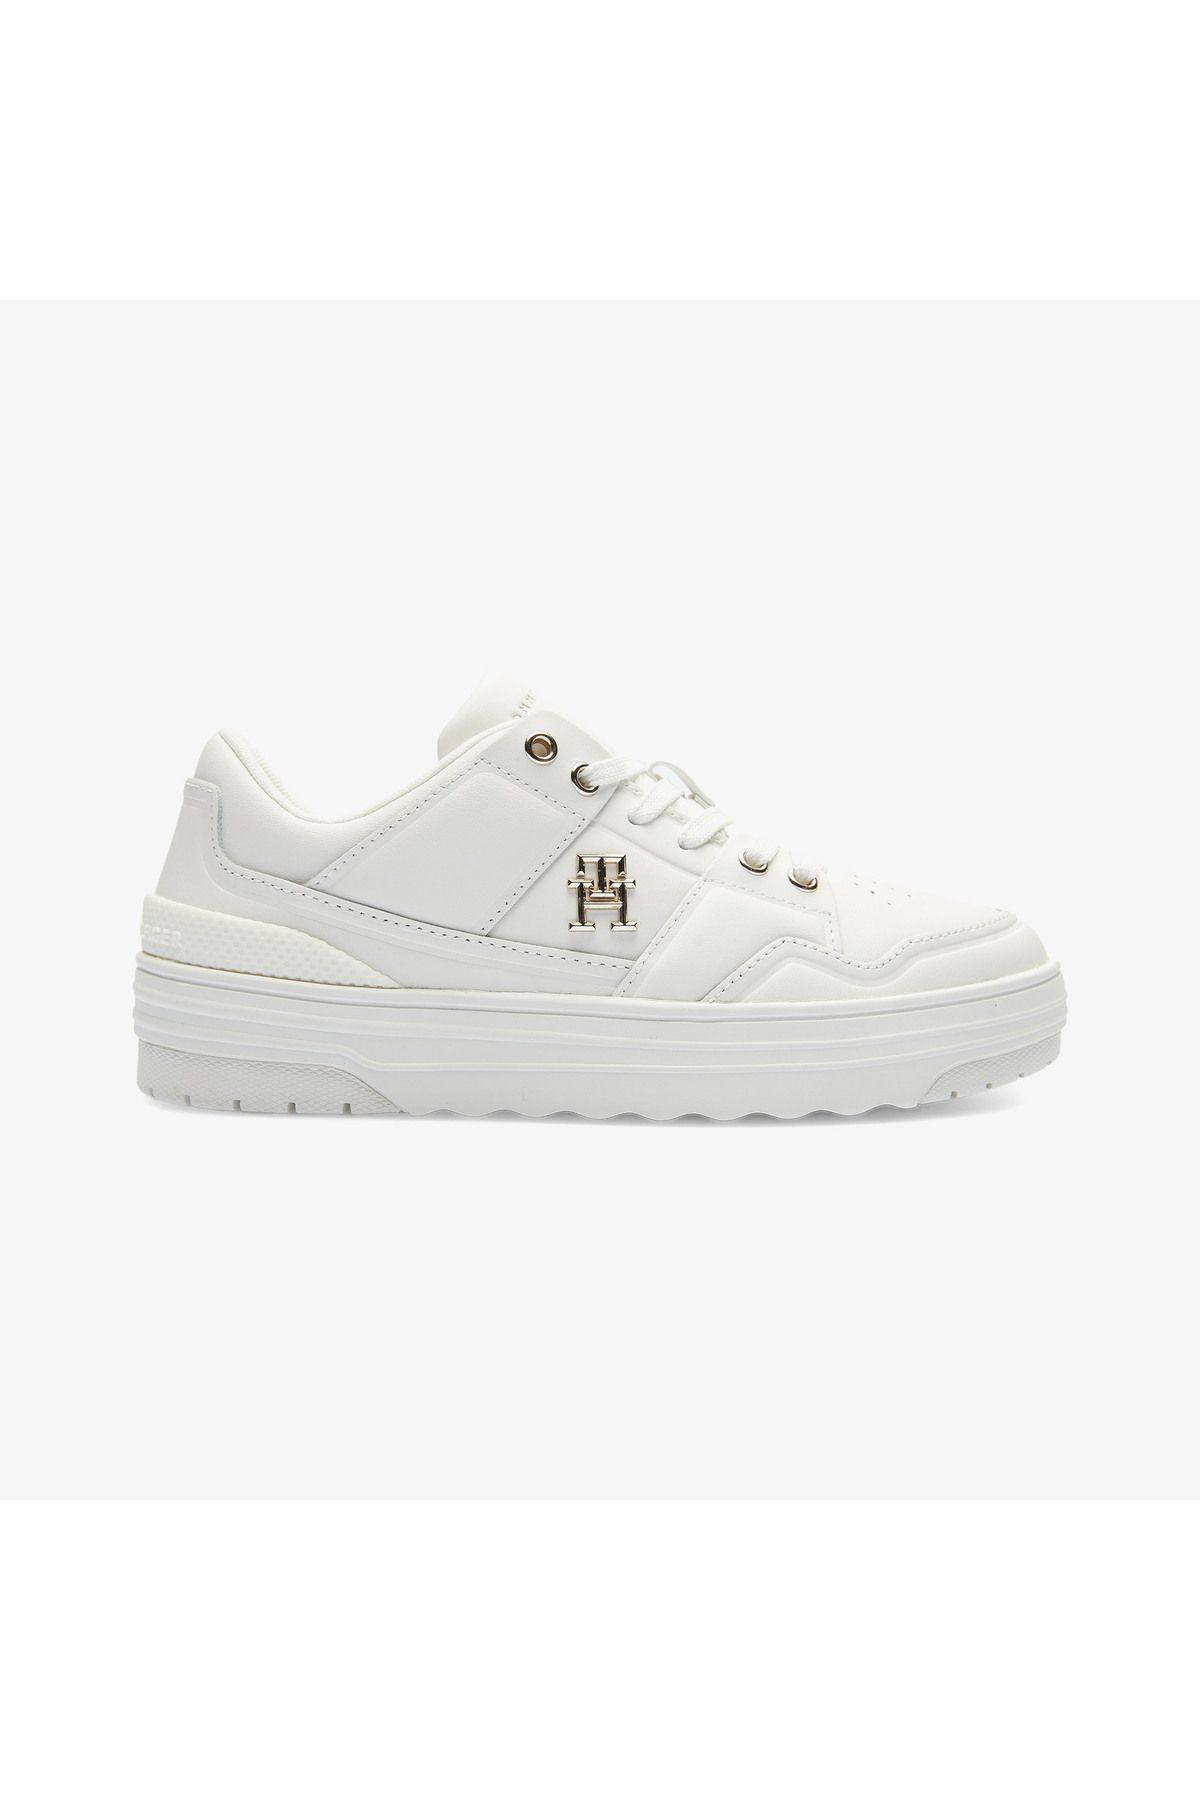 Tommy Hilfiger Basket Kadın Beyaz Sneaker